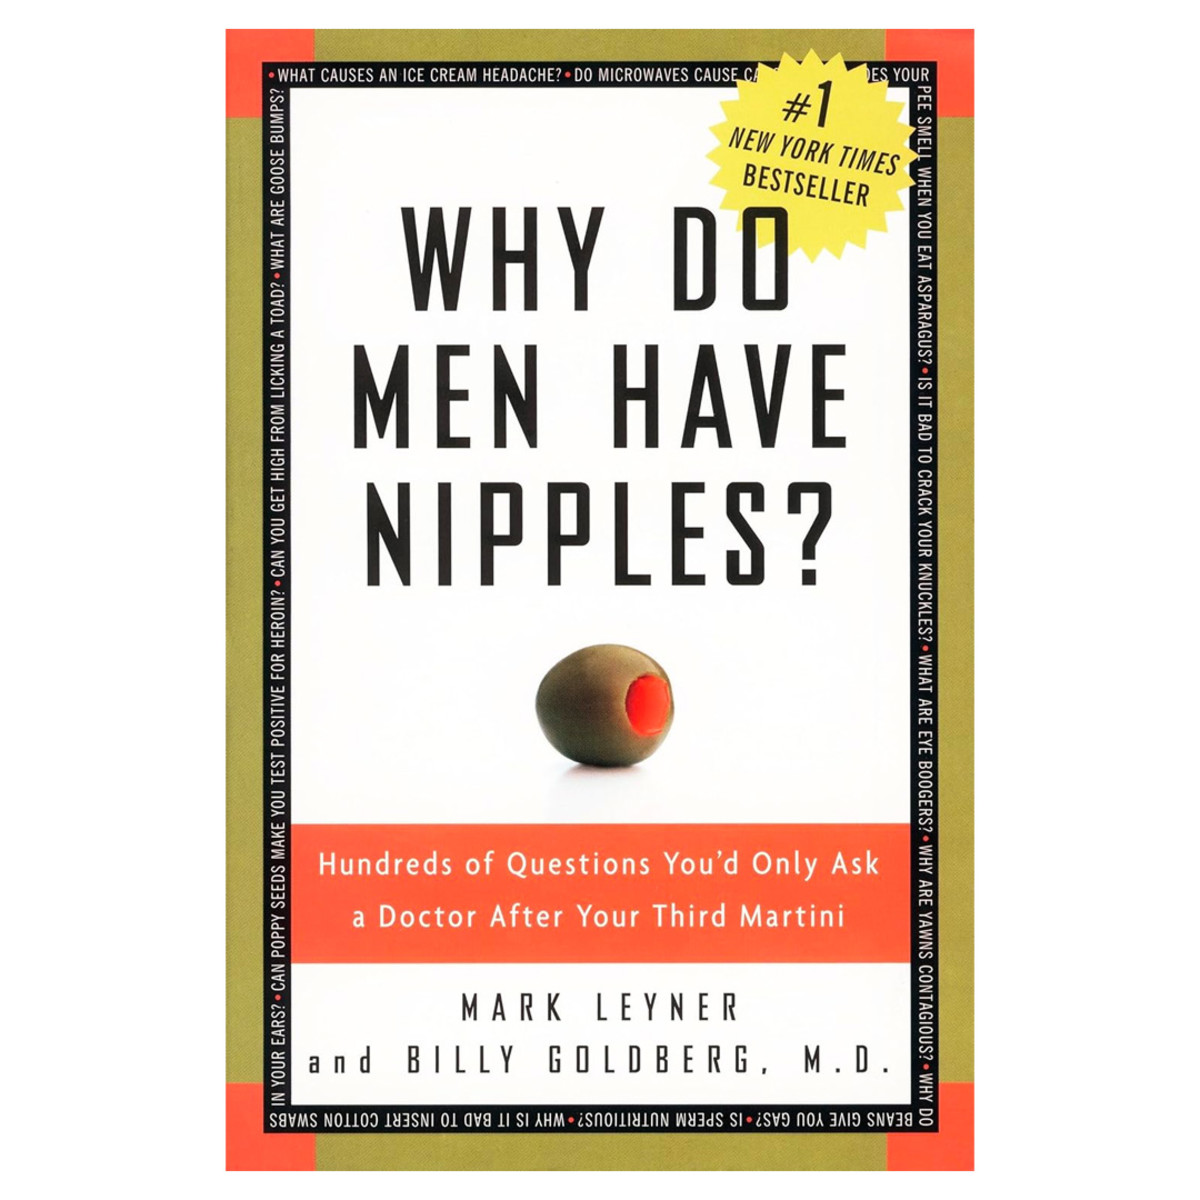 https://www.mensjournal.com/.image/t_share/MjAxOTExMjM1NTY1MDcwMTE0/why-do-men-have-nipples.jpg